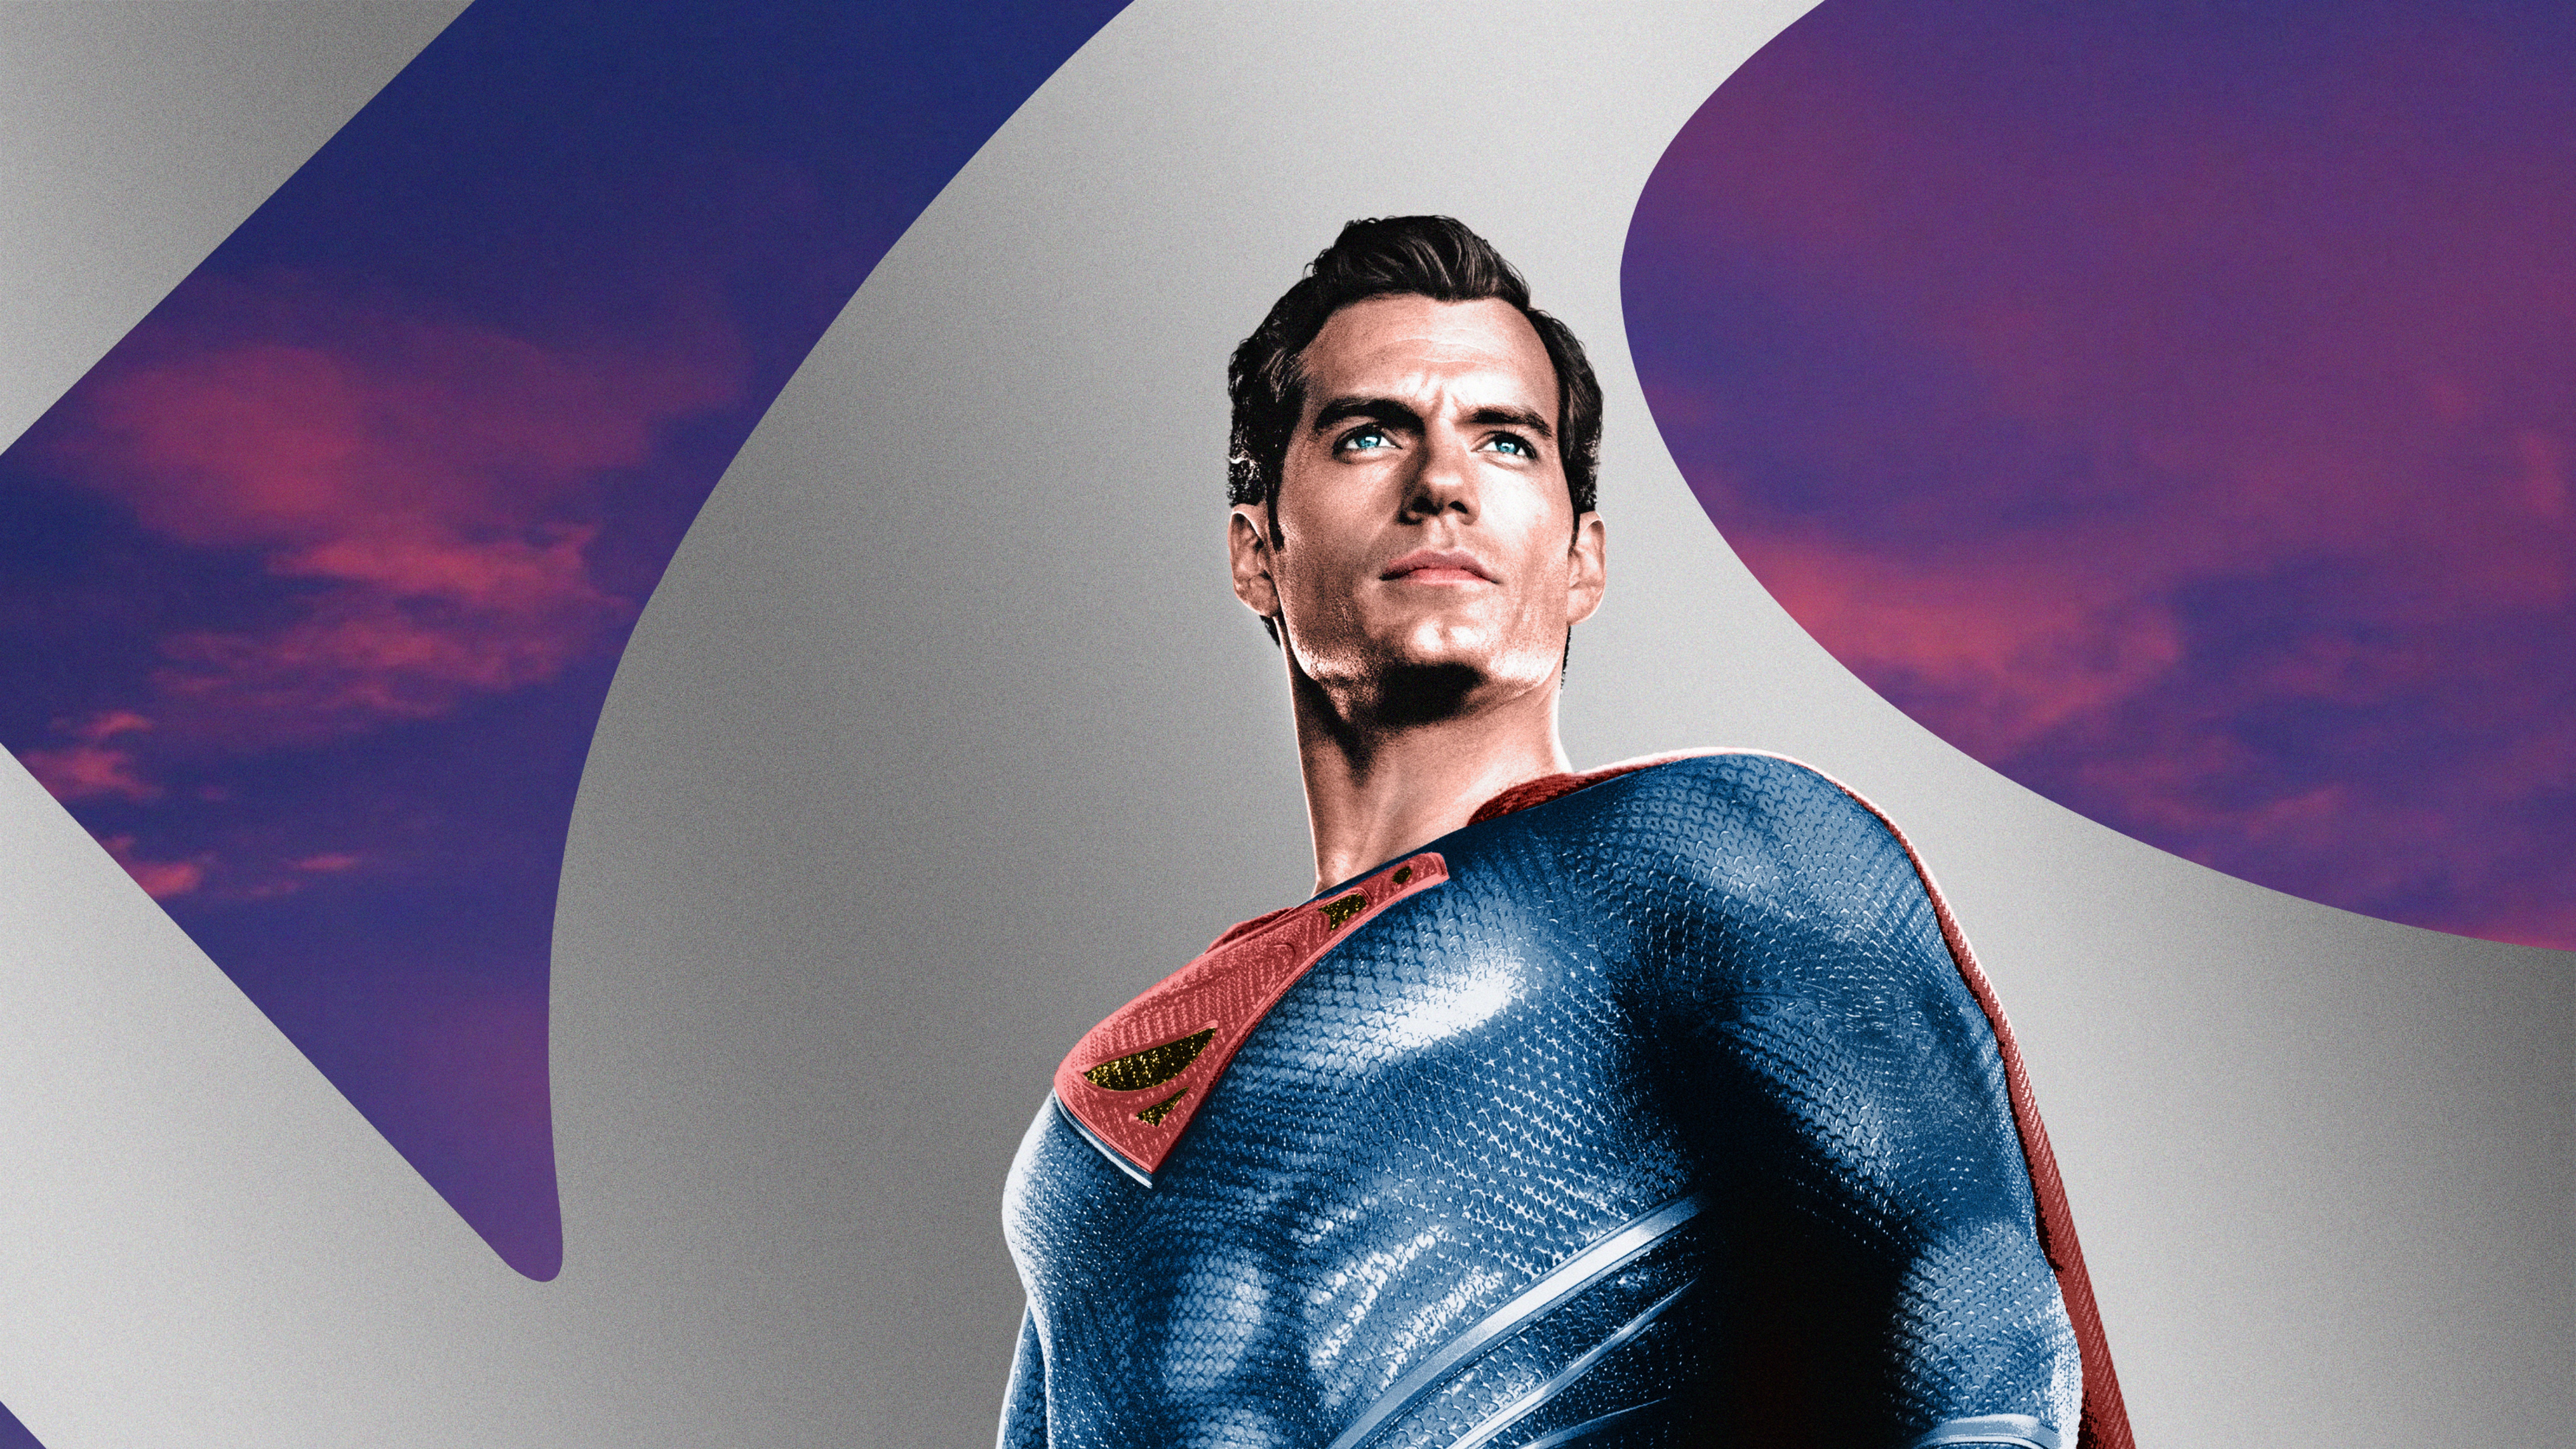 2020 4k Superman Henry Cavill Wallpaper,HD Superheroes Wallpapers